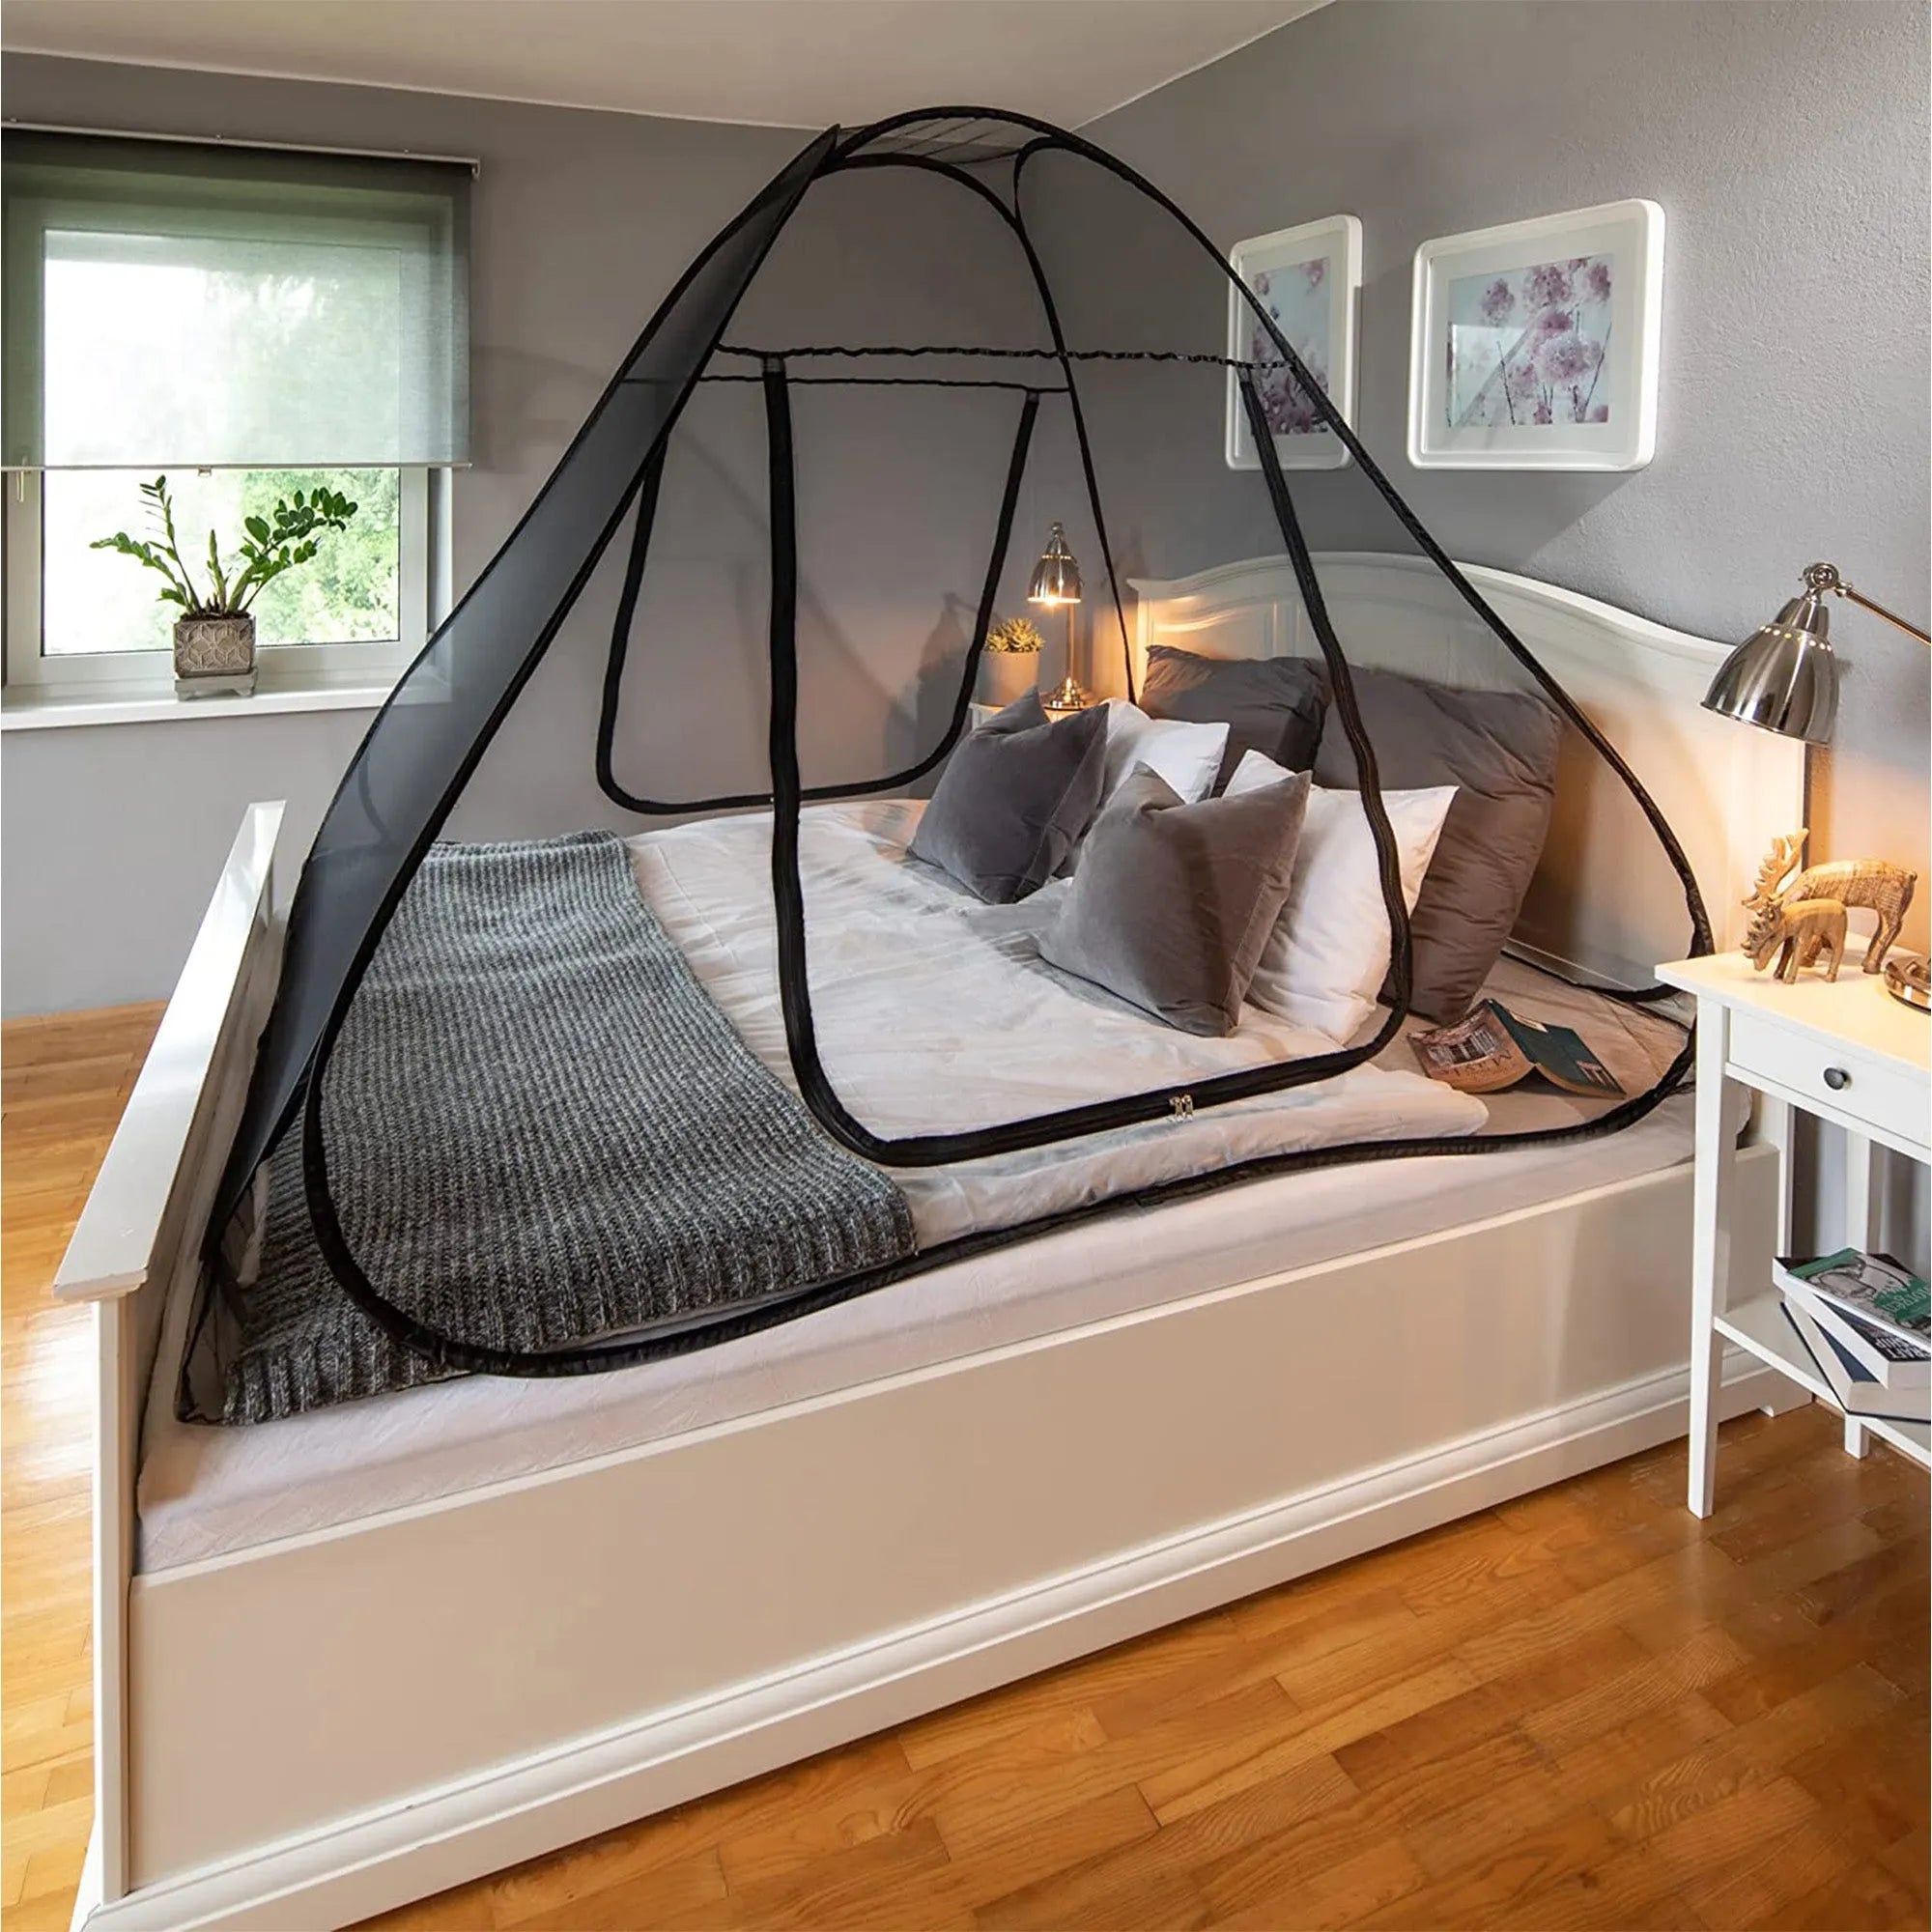 Bed tent Pop-up Adult 200x180 cm